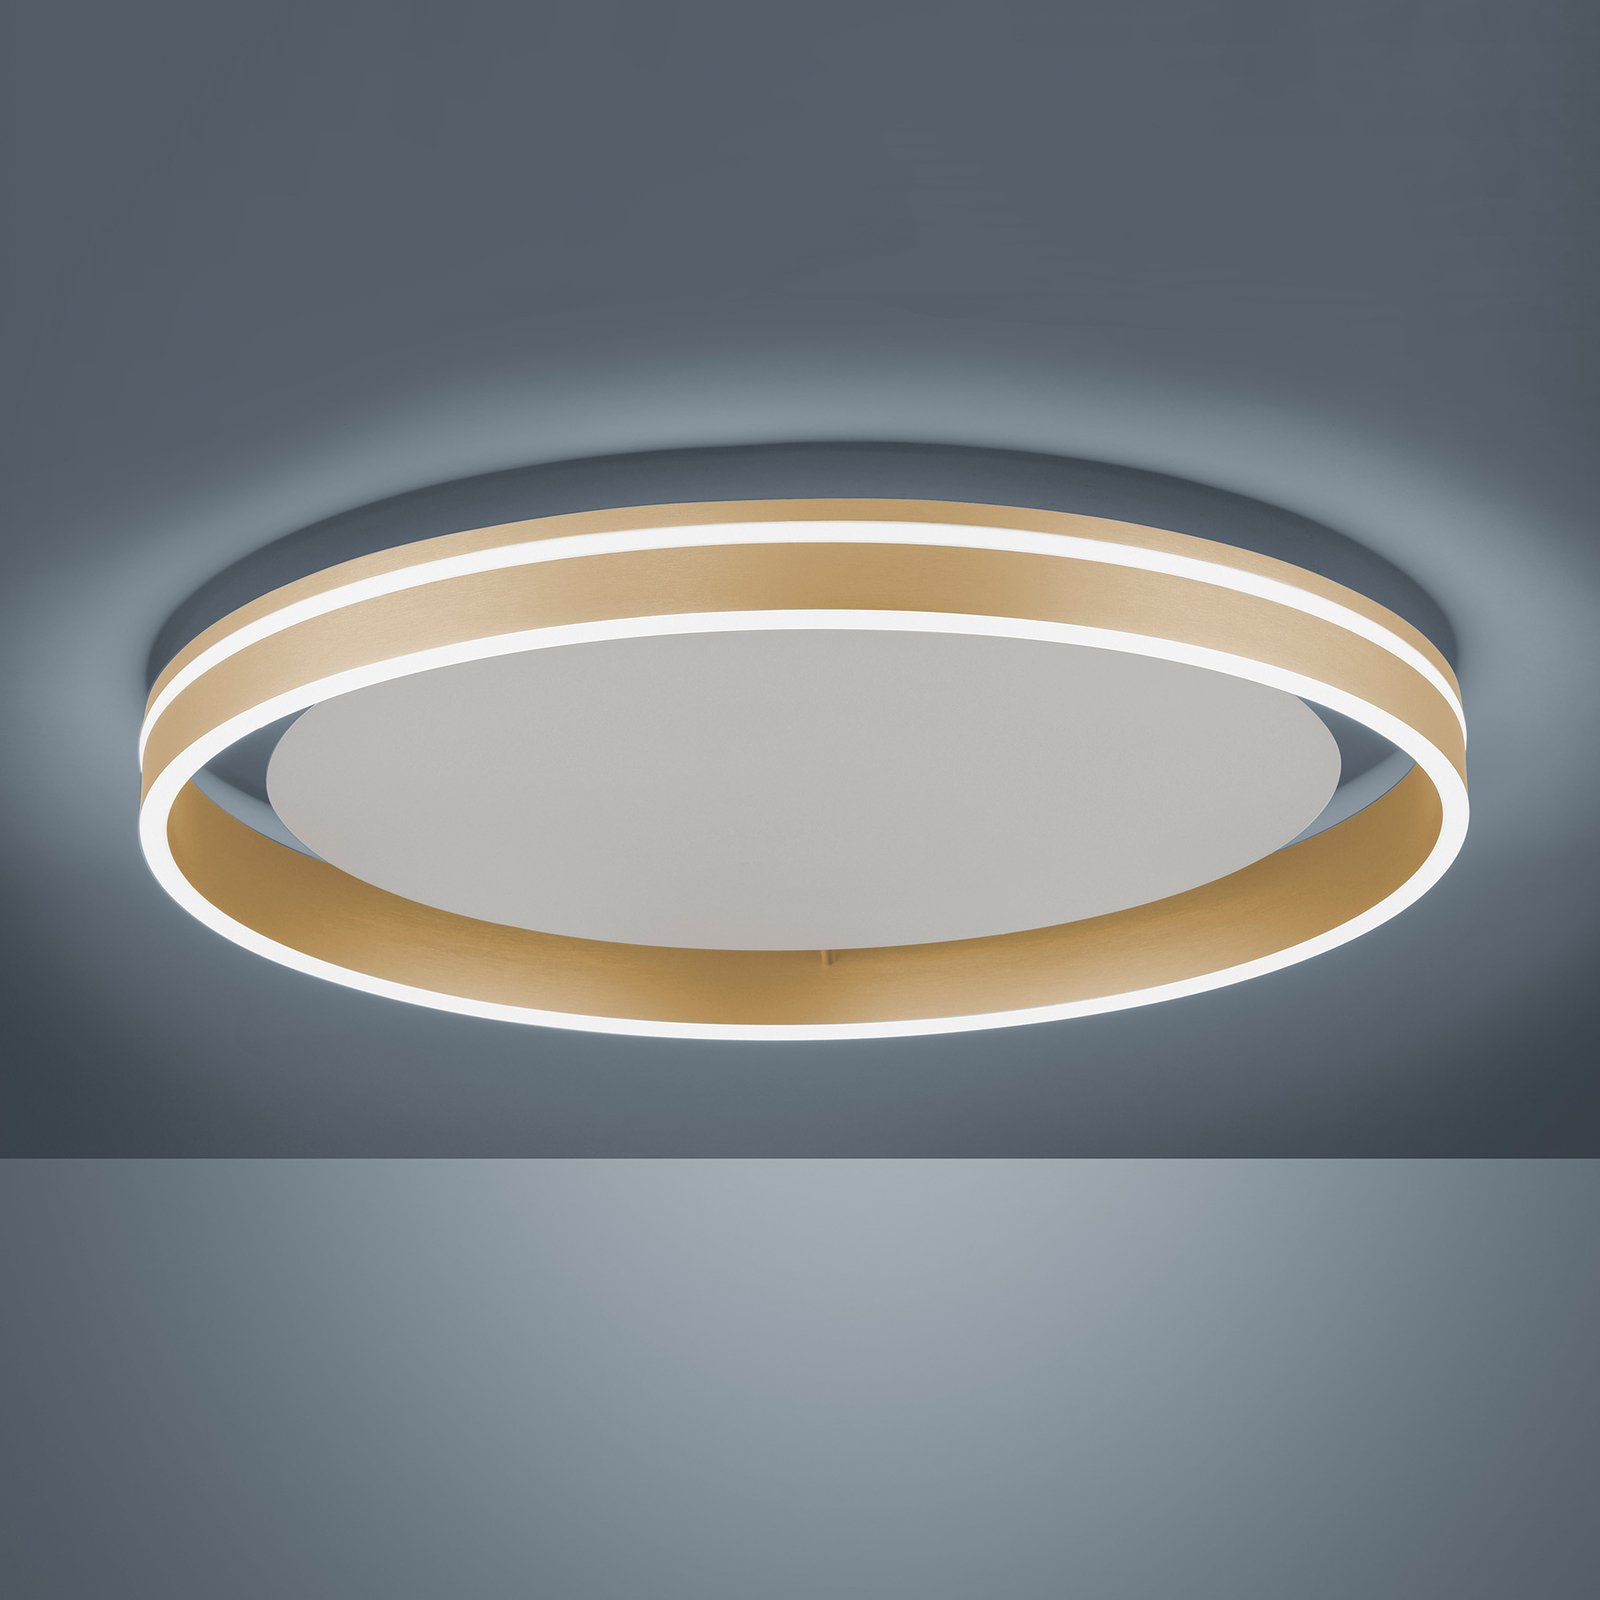 Paul Neuhaus Q-VITO LED stropní svítidlo, Ø 60 cm